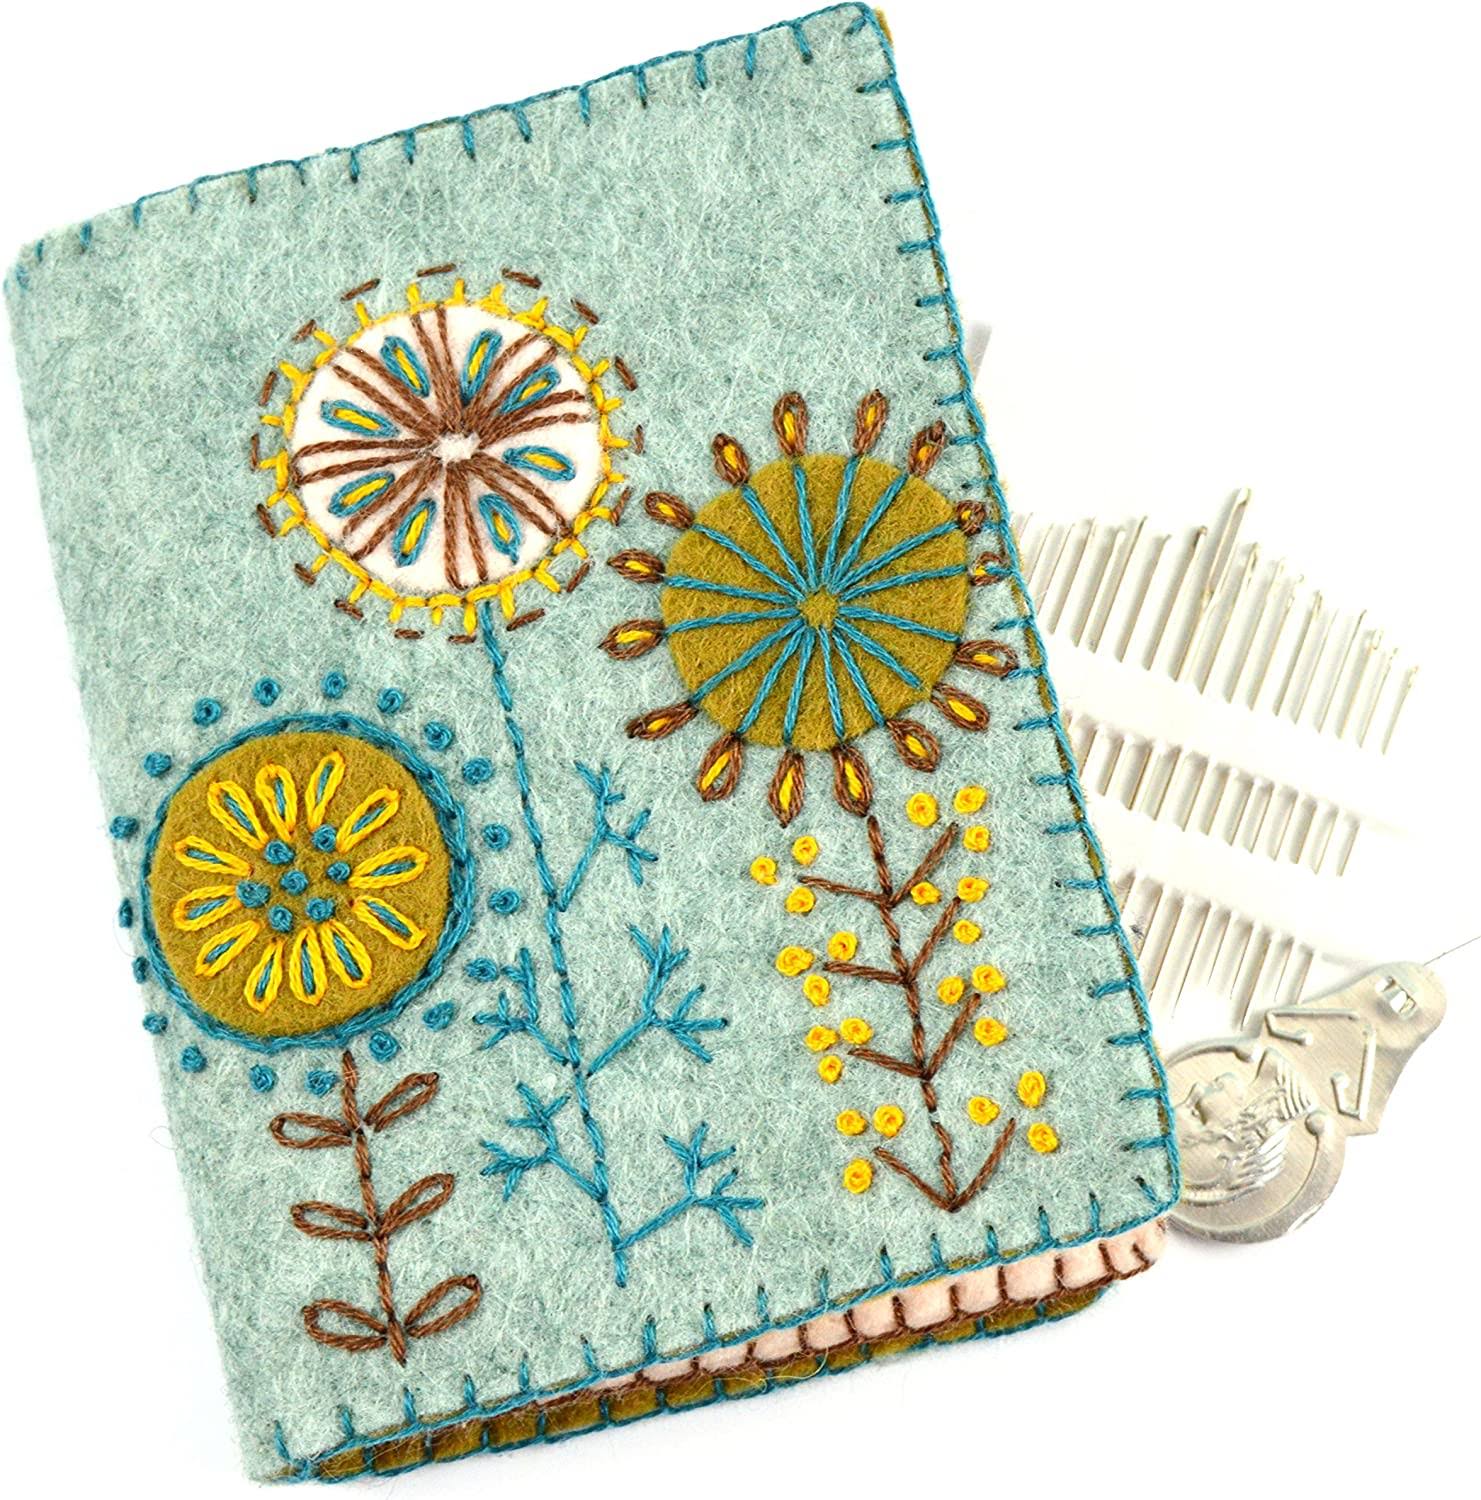 Corinne LaPierre Felt Needle Case Embroidery Craft Kit